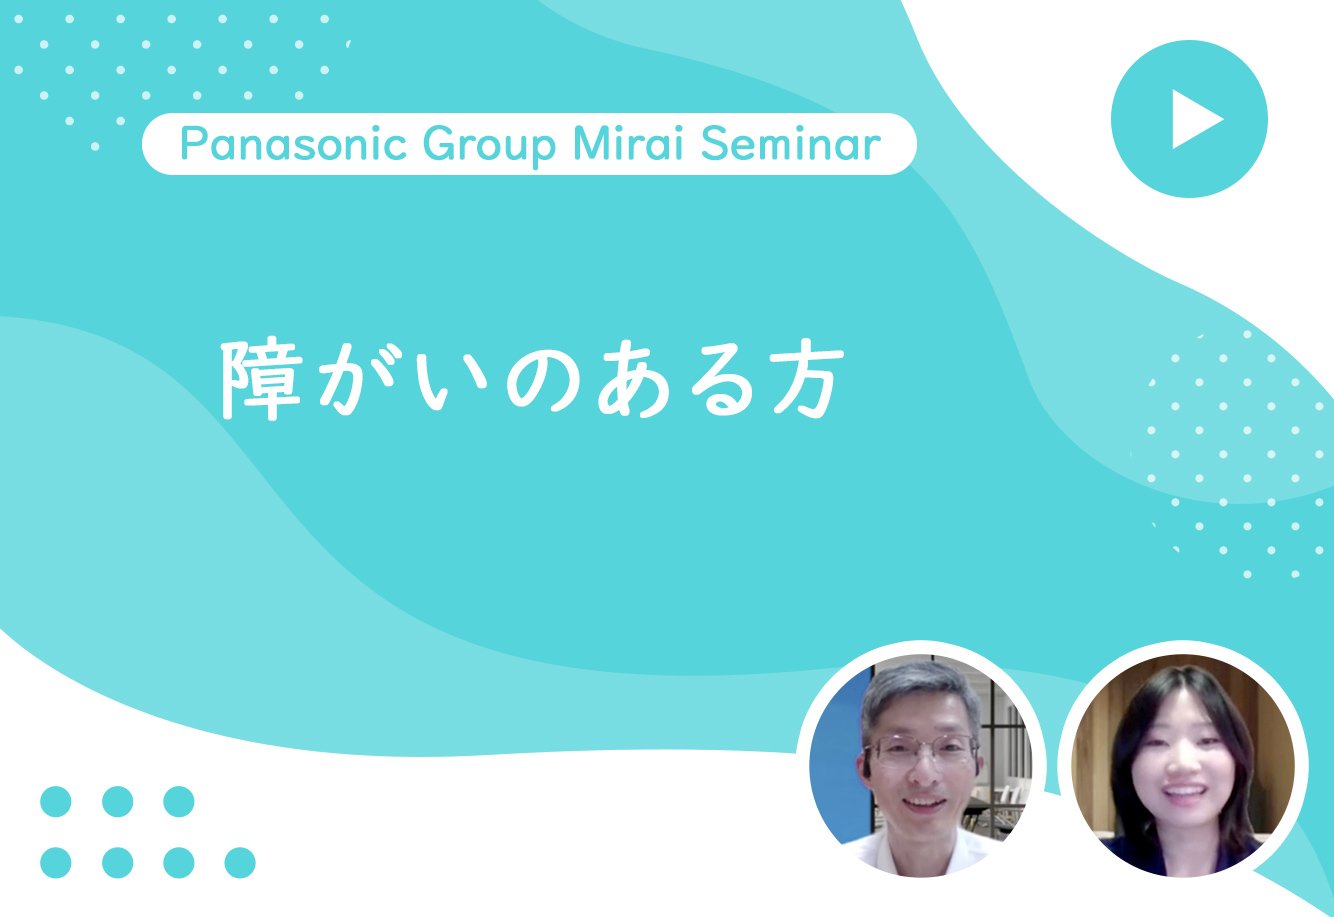 Panasonic Group Mirai Seminar 障がいのある方